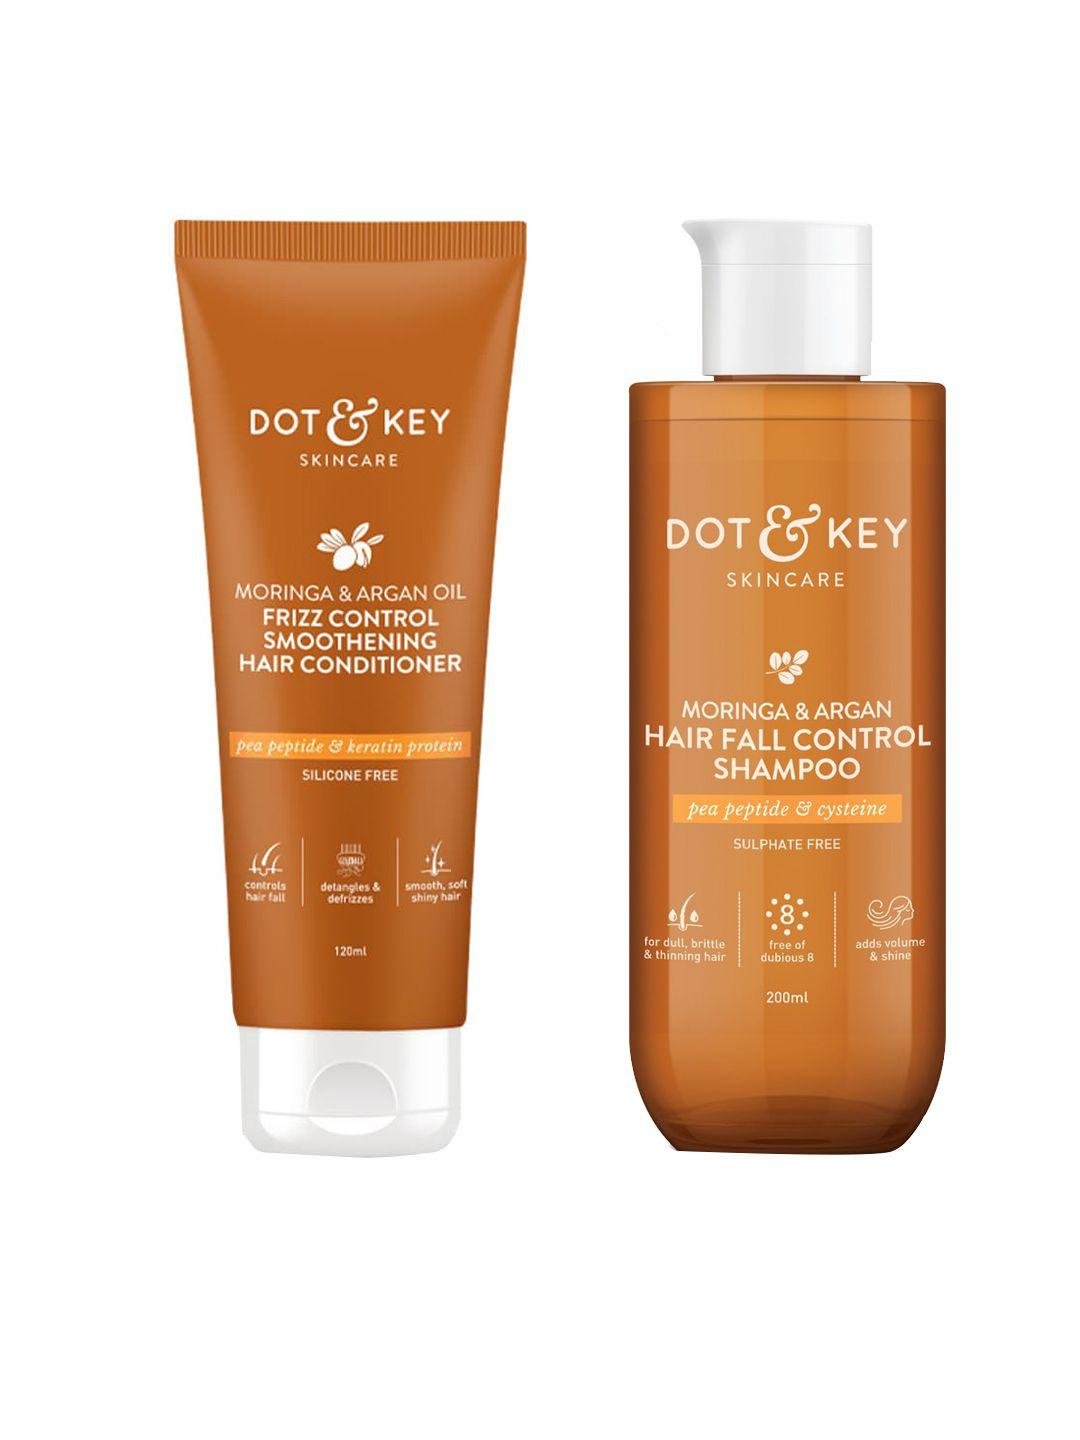 dot & key moringa & argan oil hair fall control shampoo 200ml & hair conditioner 120ml